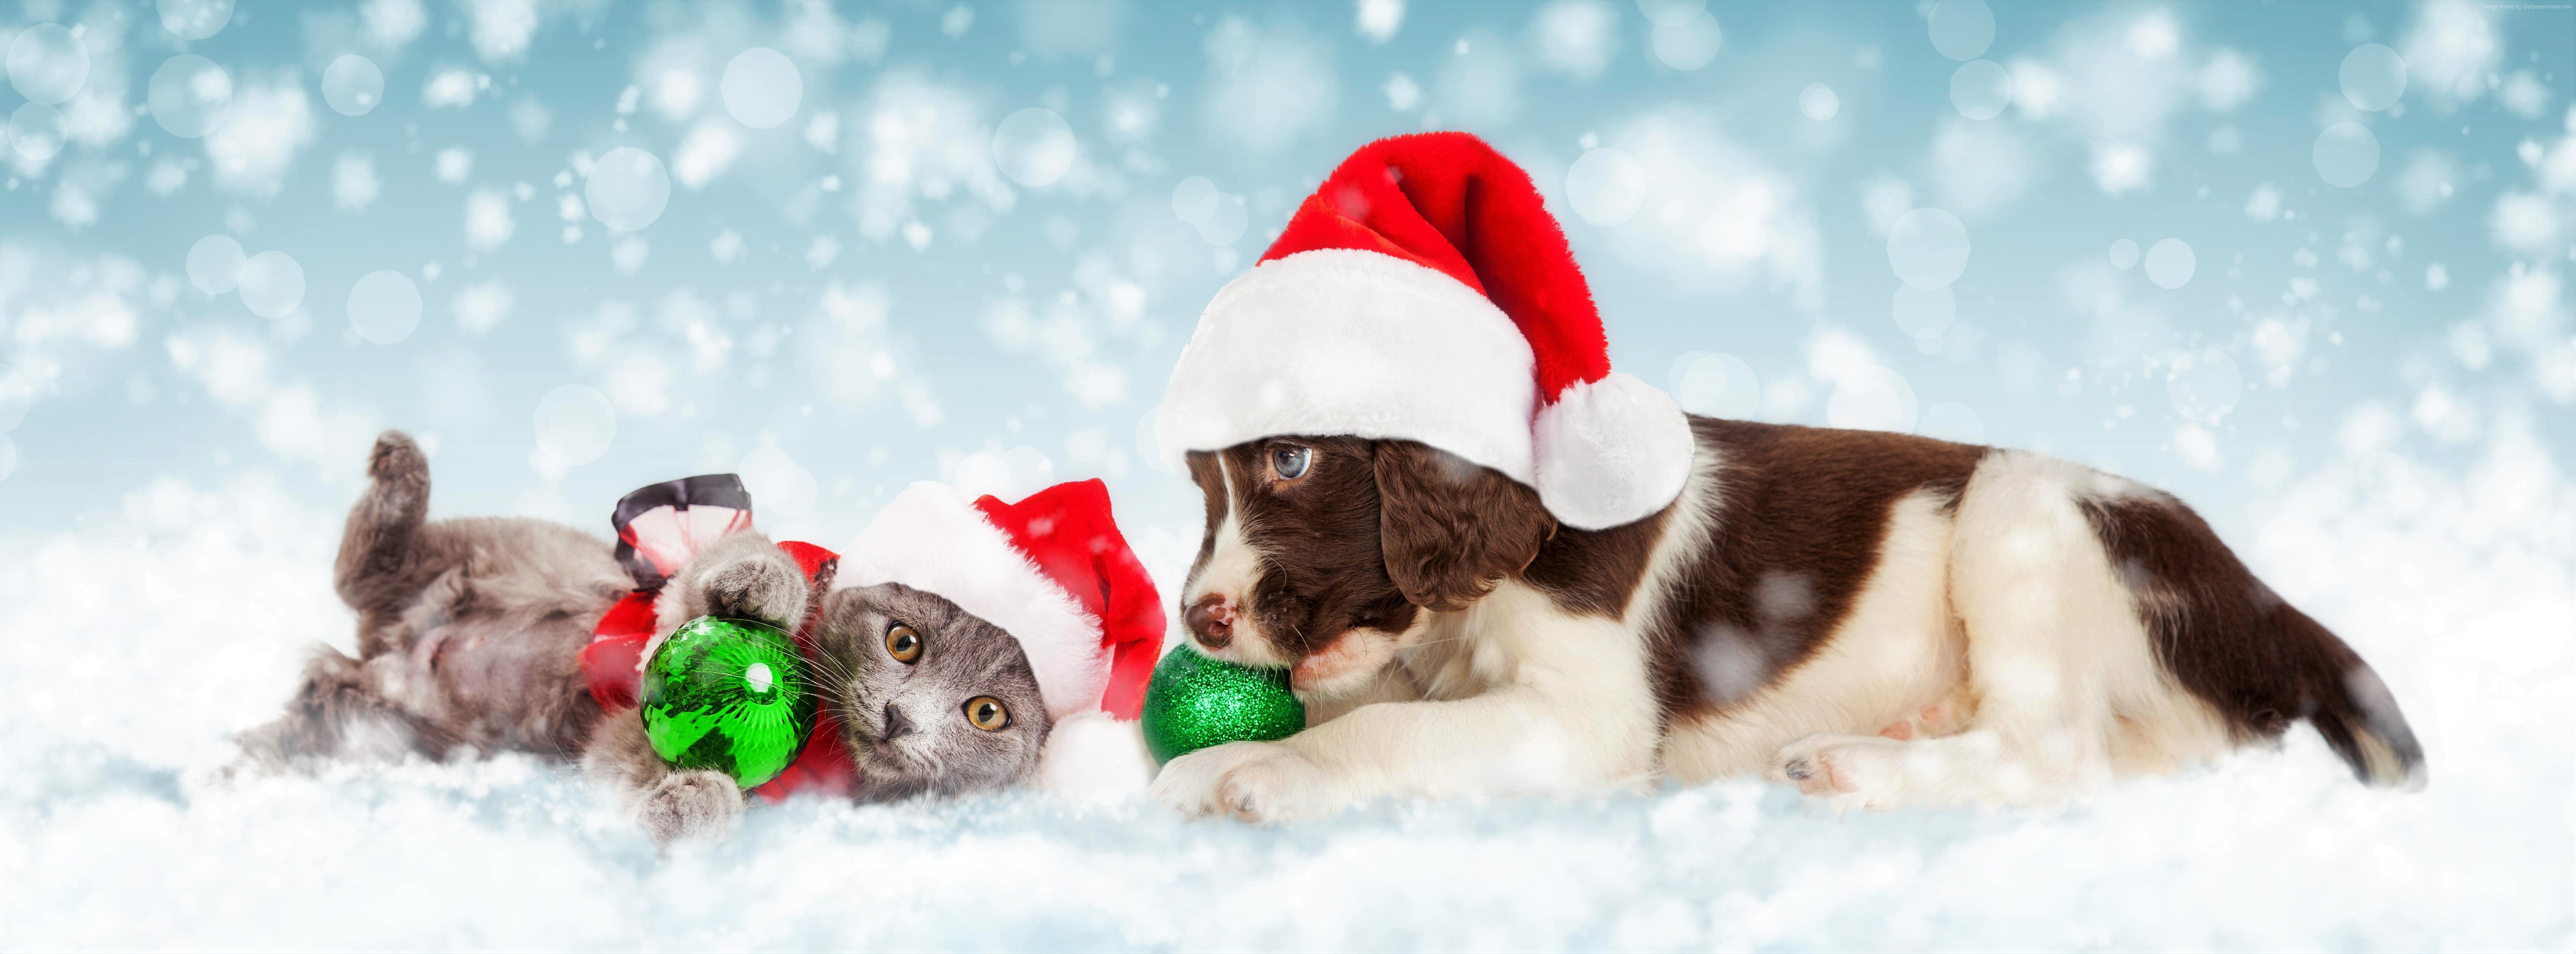 Download mobile wallpaper Snow, Cat, Kitten, Dog, Christmas, Animal, Puppy, Snowfall, Christmas Ornaments, Baby Animal, Santa Hat, Cat & Dog for free.